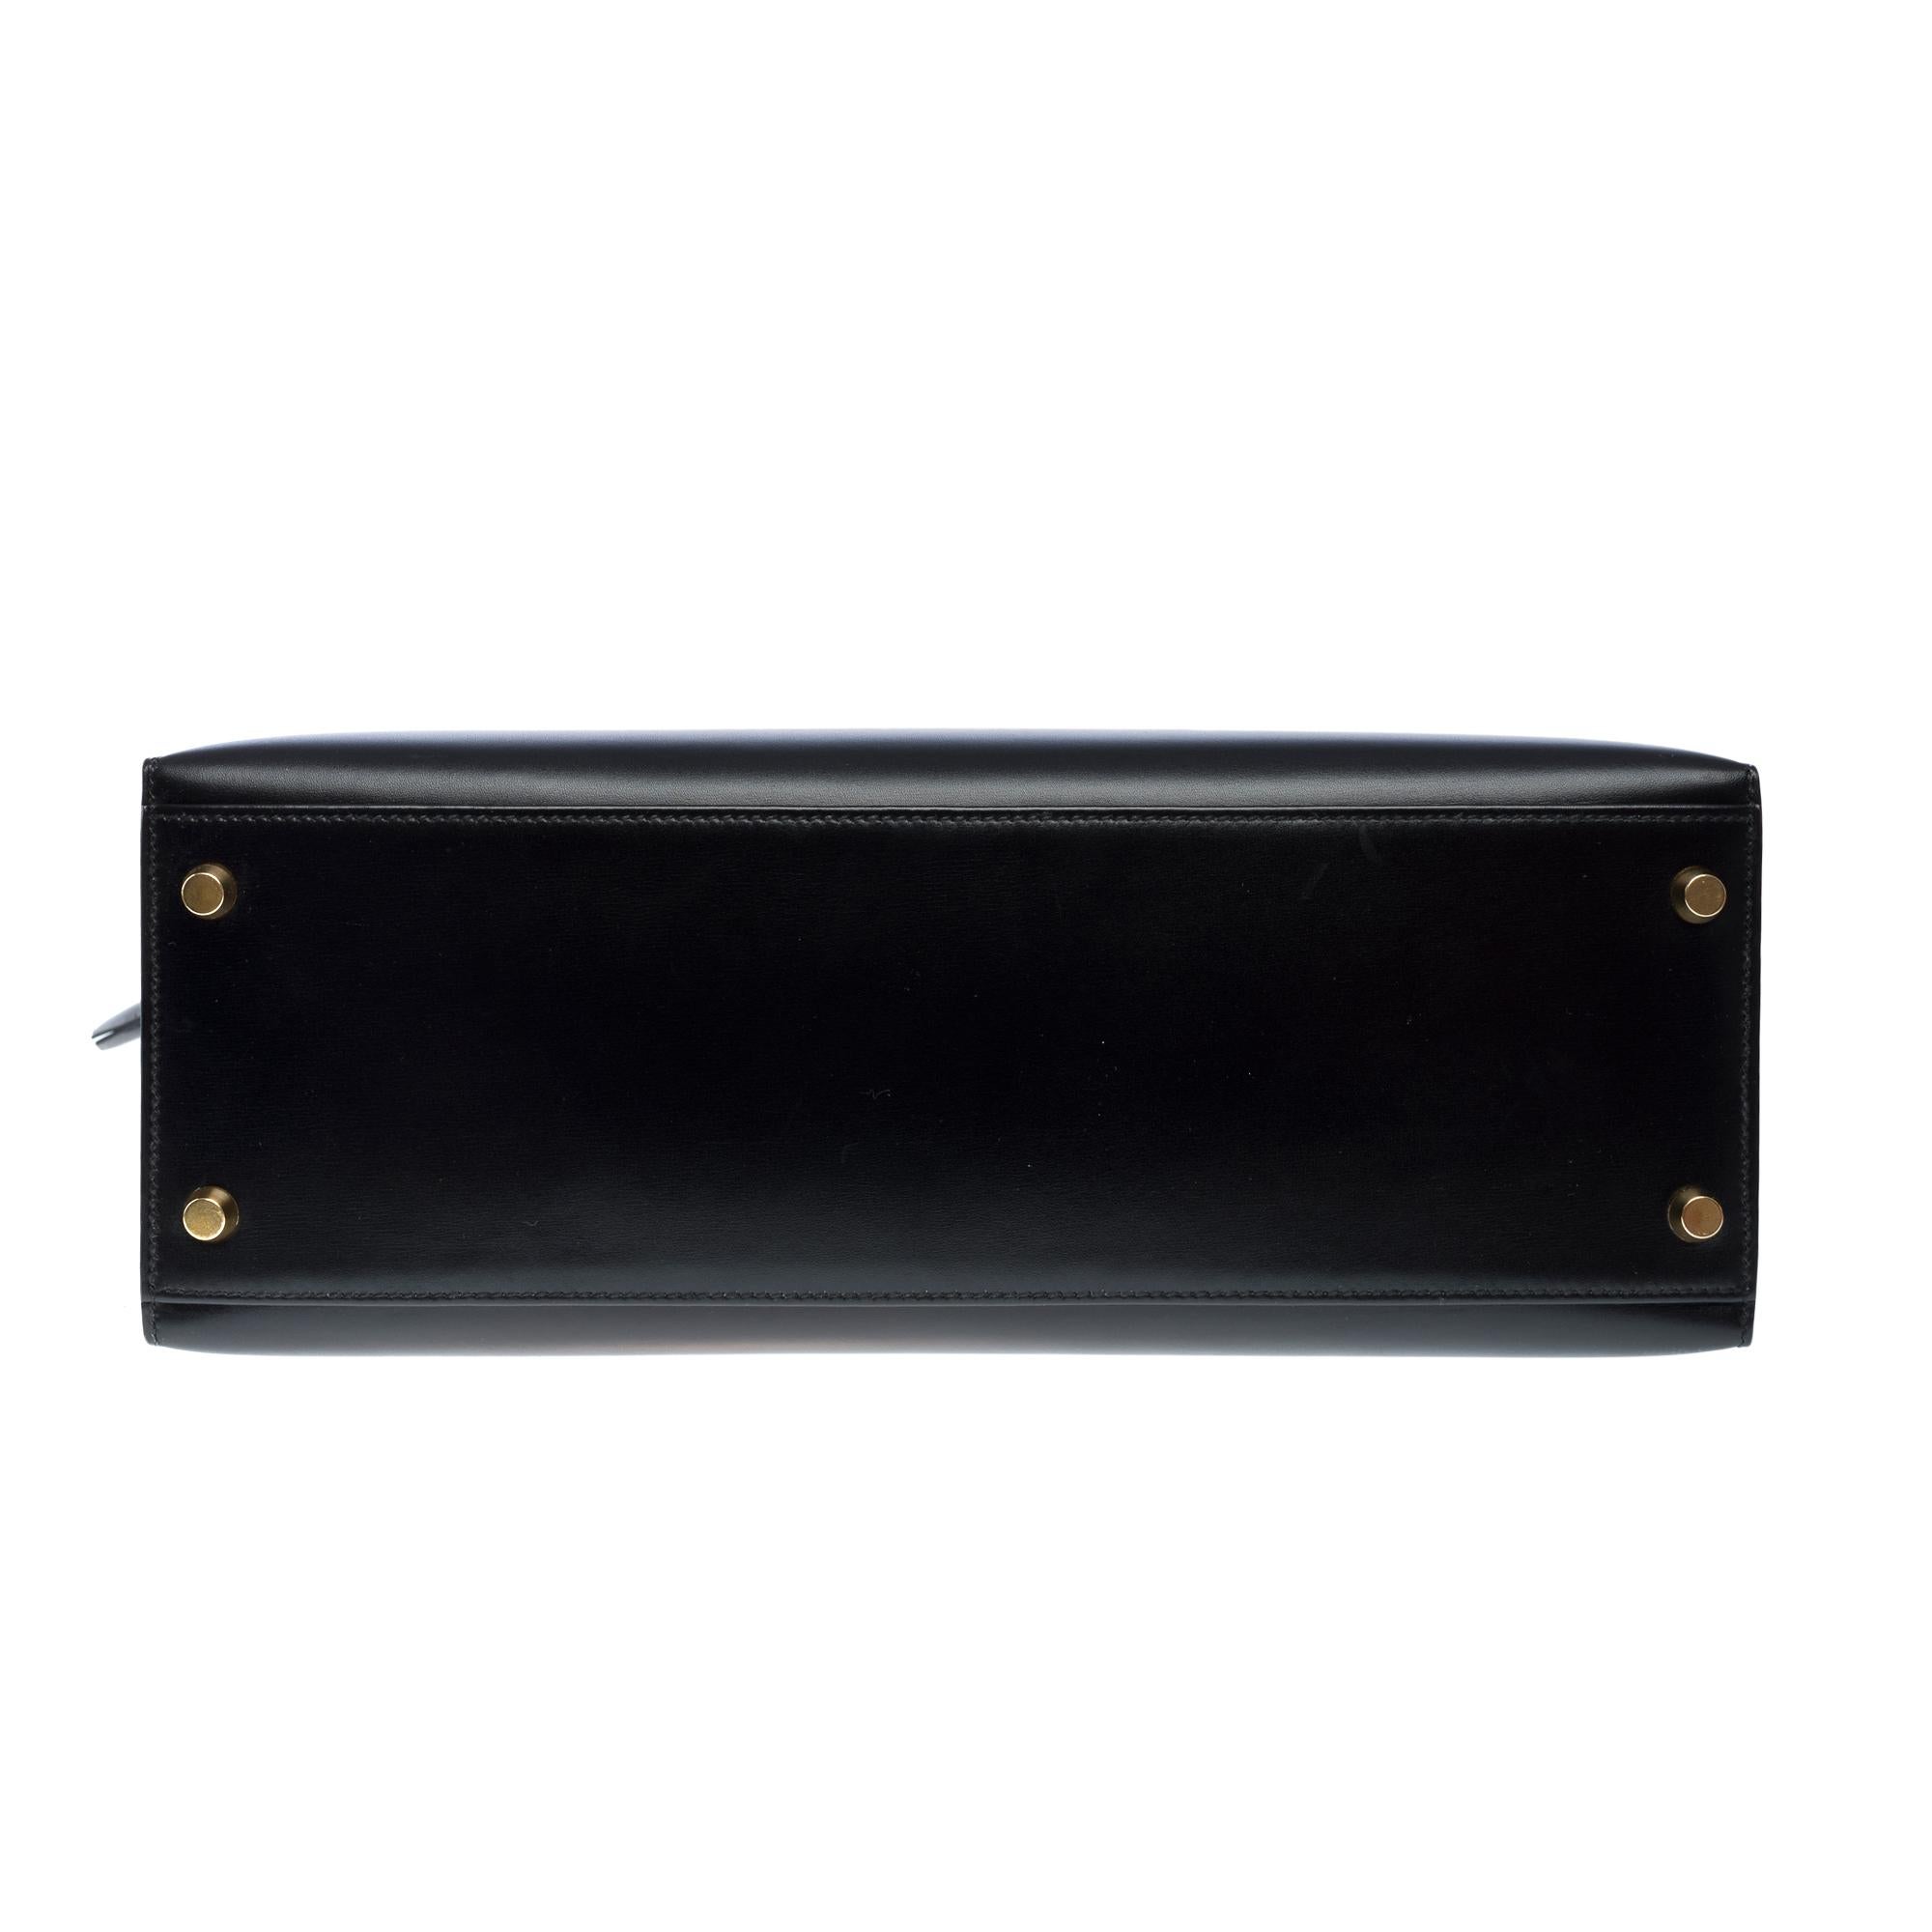 Stunning Hermès Kelly 32 sellier handbag strap in Black Box Calf leather, GHW For Sale 7